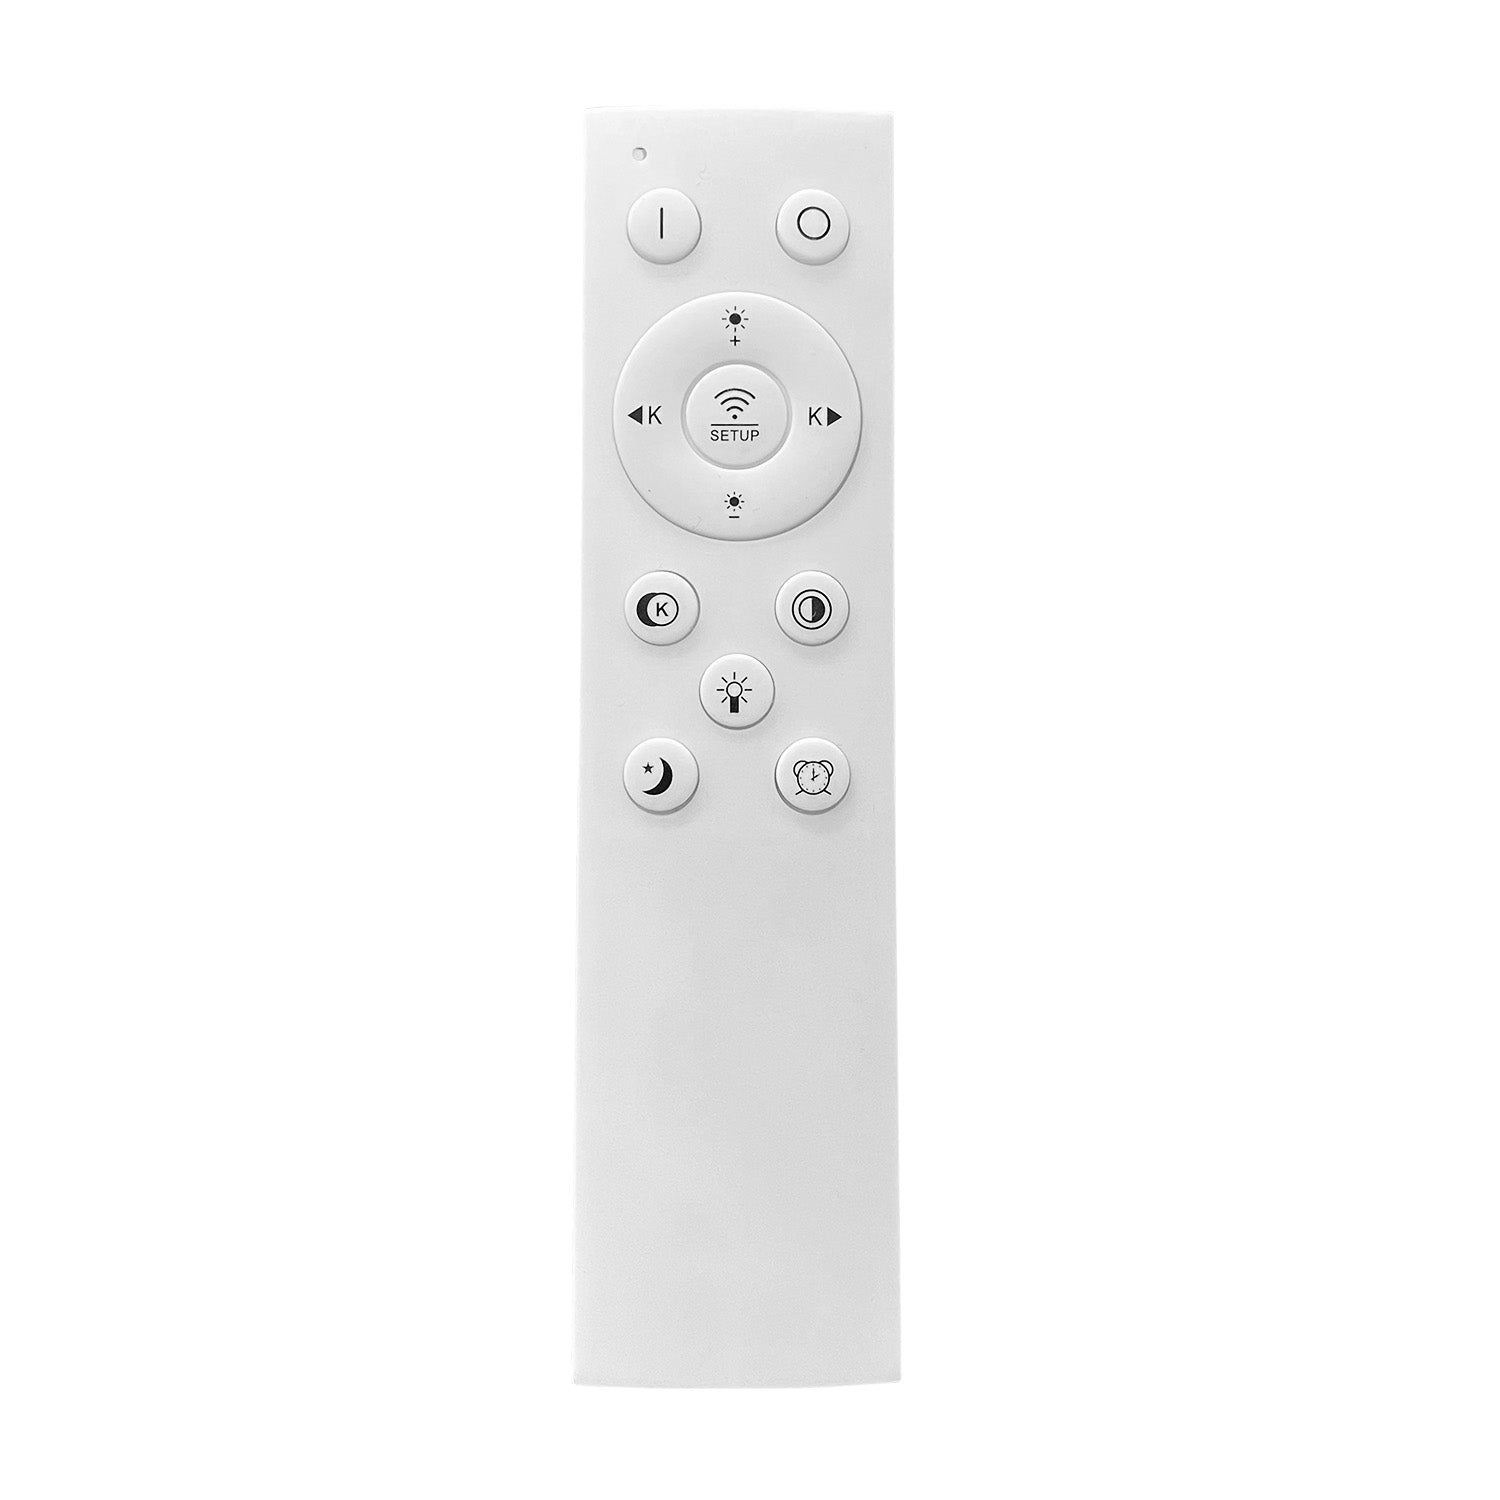 Bluetooth remote control 2.4g